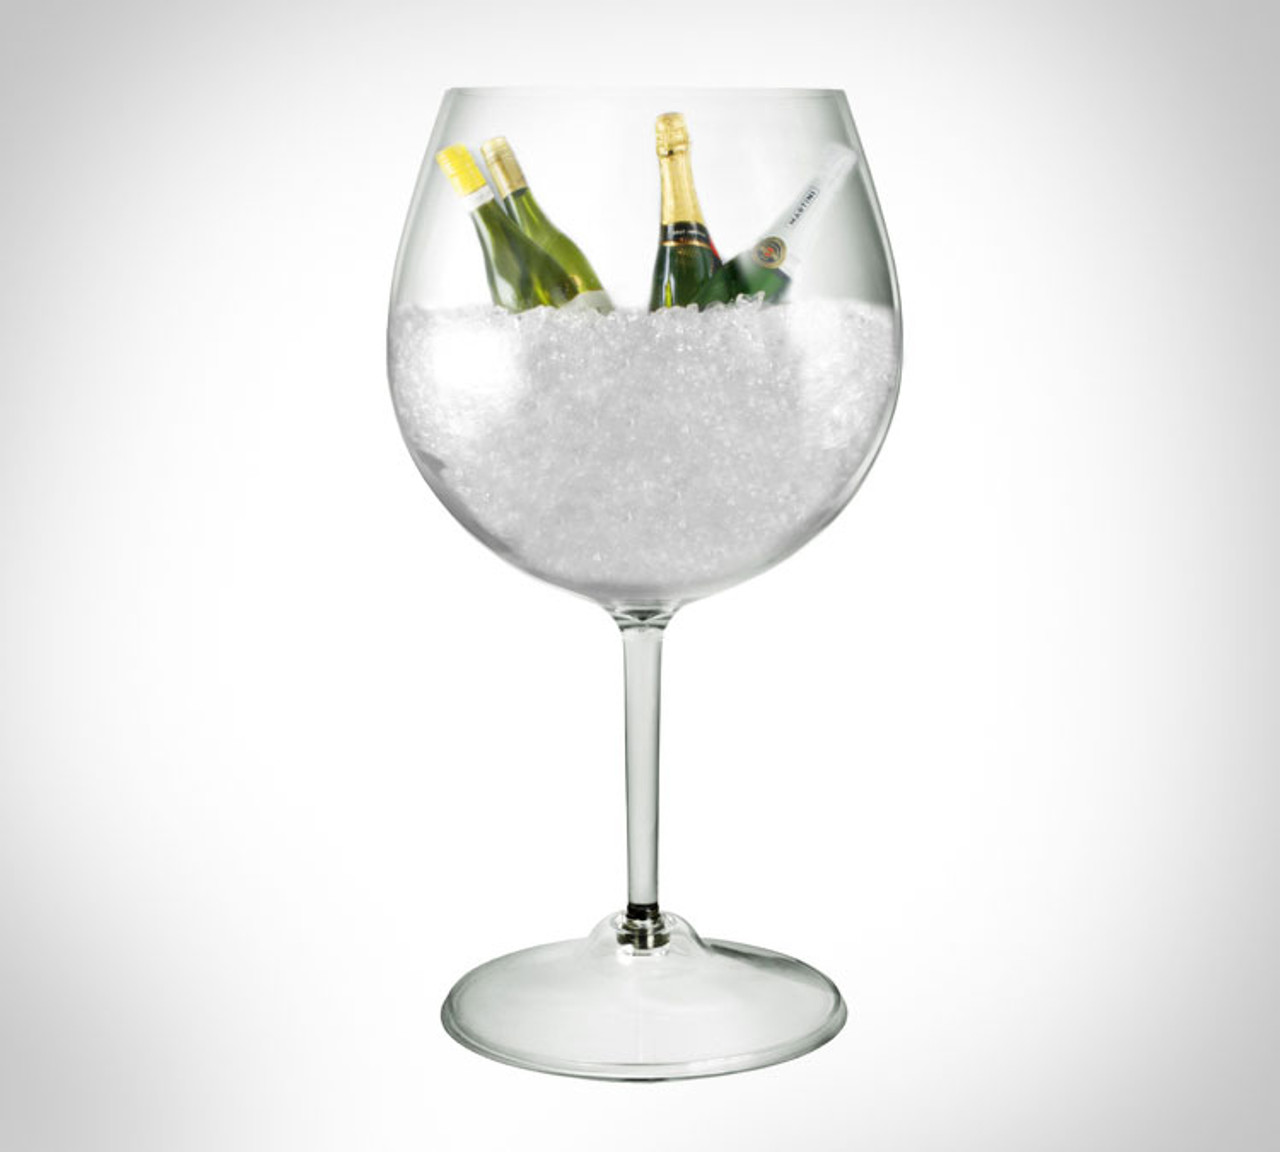 LARGE WINE GLASS BIG MARTINI GLASS 38.8inch x 19.8inch FREE SHIPPING